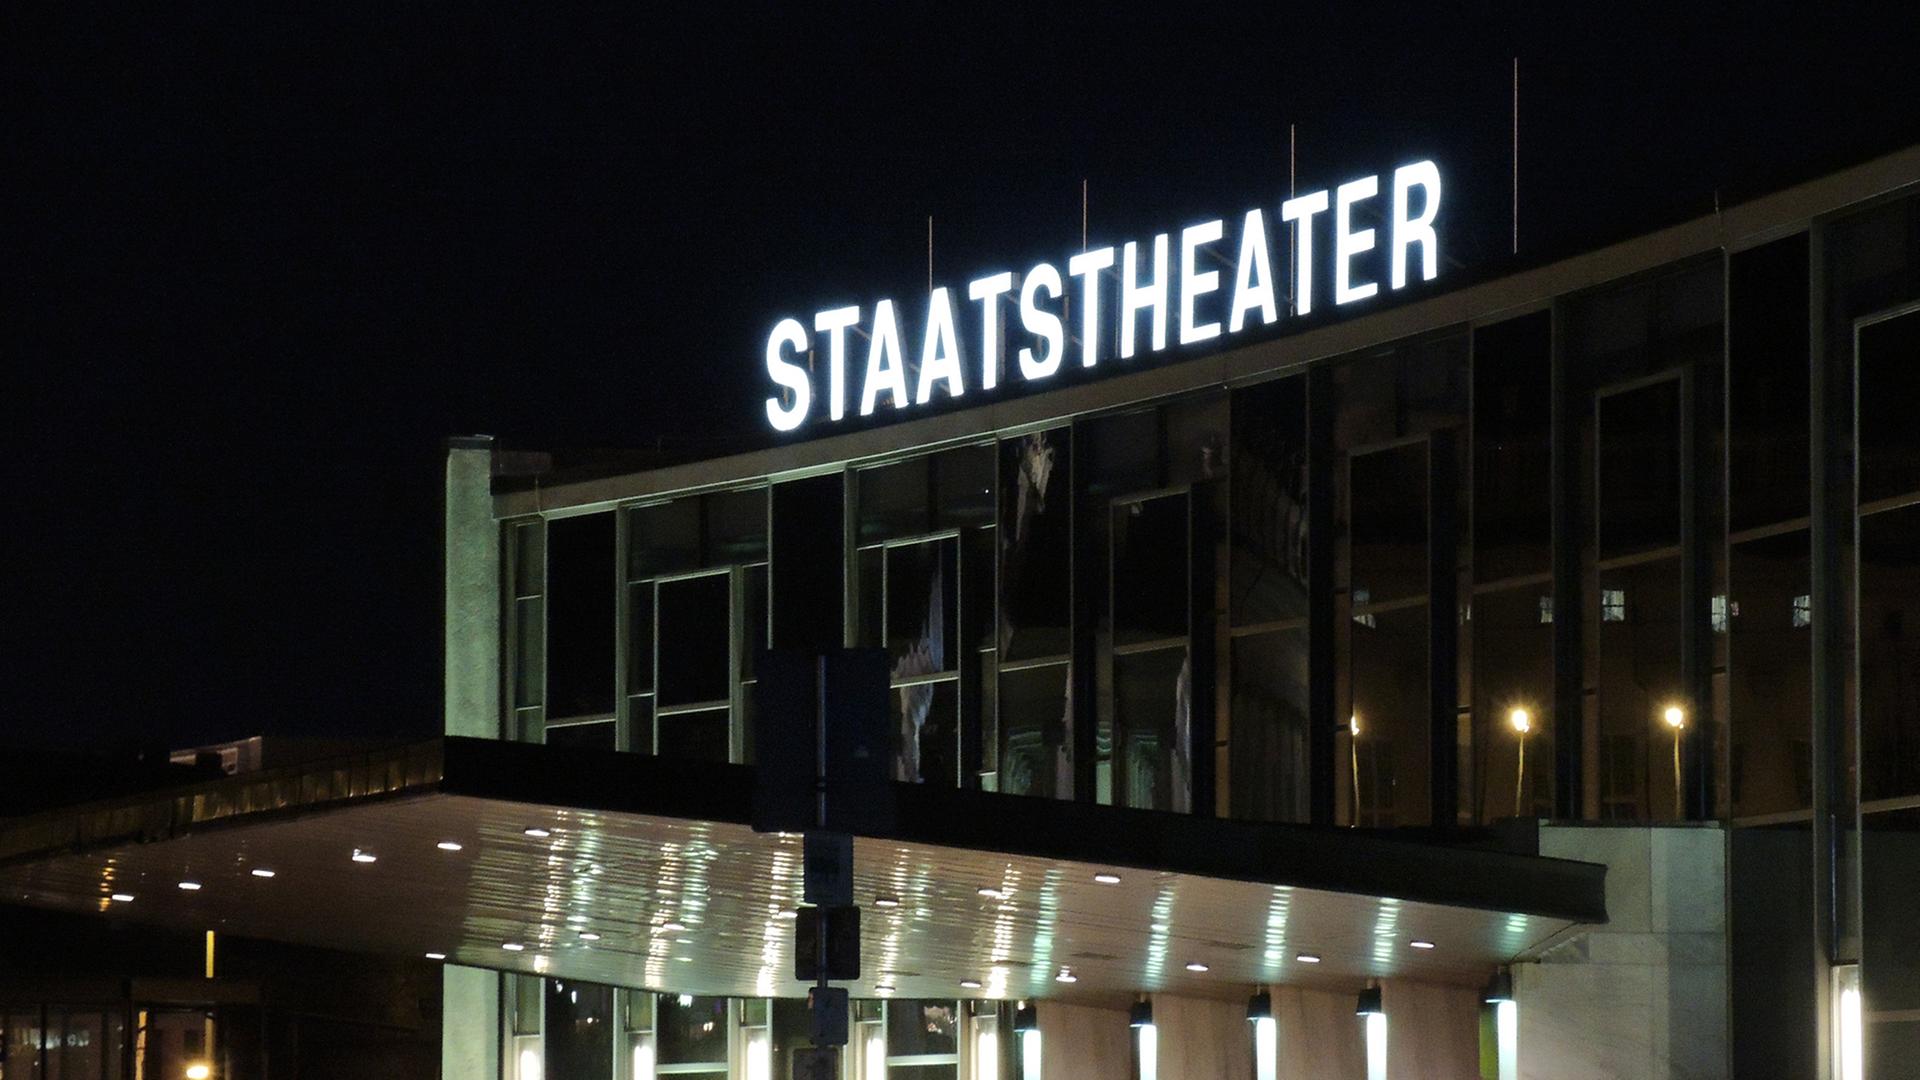 Das Staatstheater in Kassel, Deutschland am 19. Dezember 2013 bei Dunkelheit.